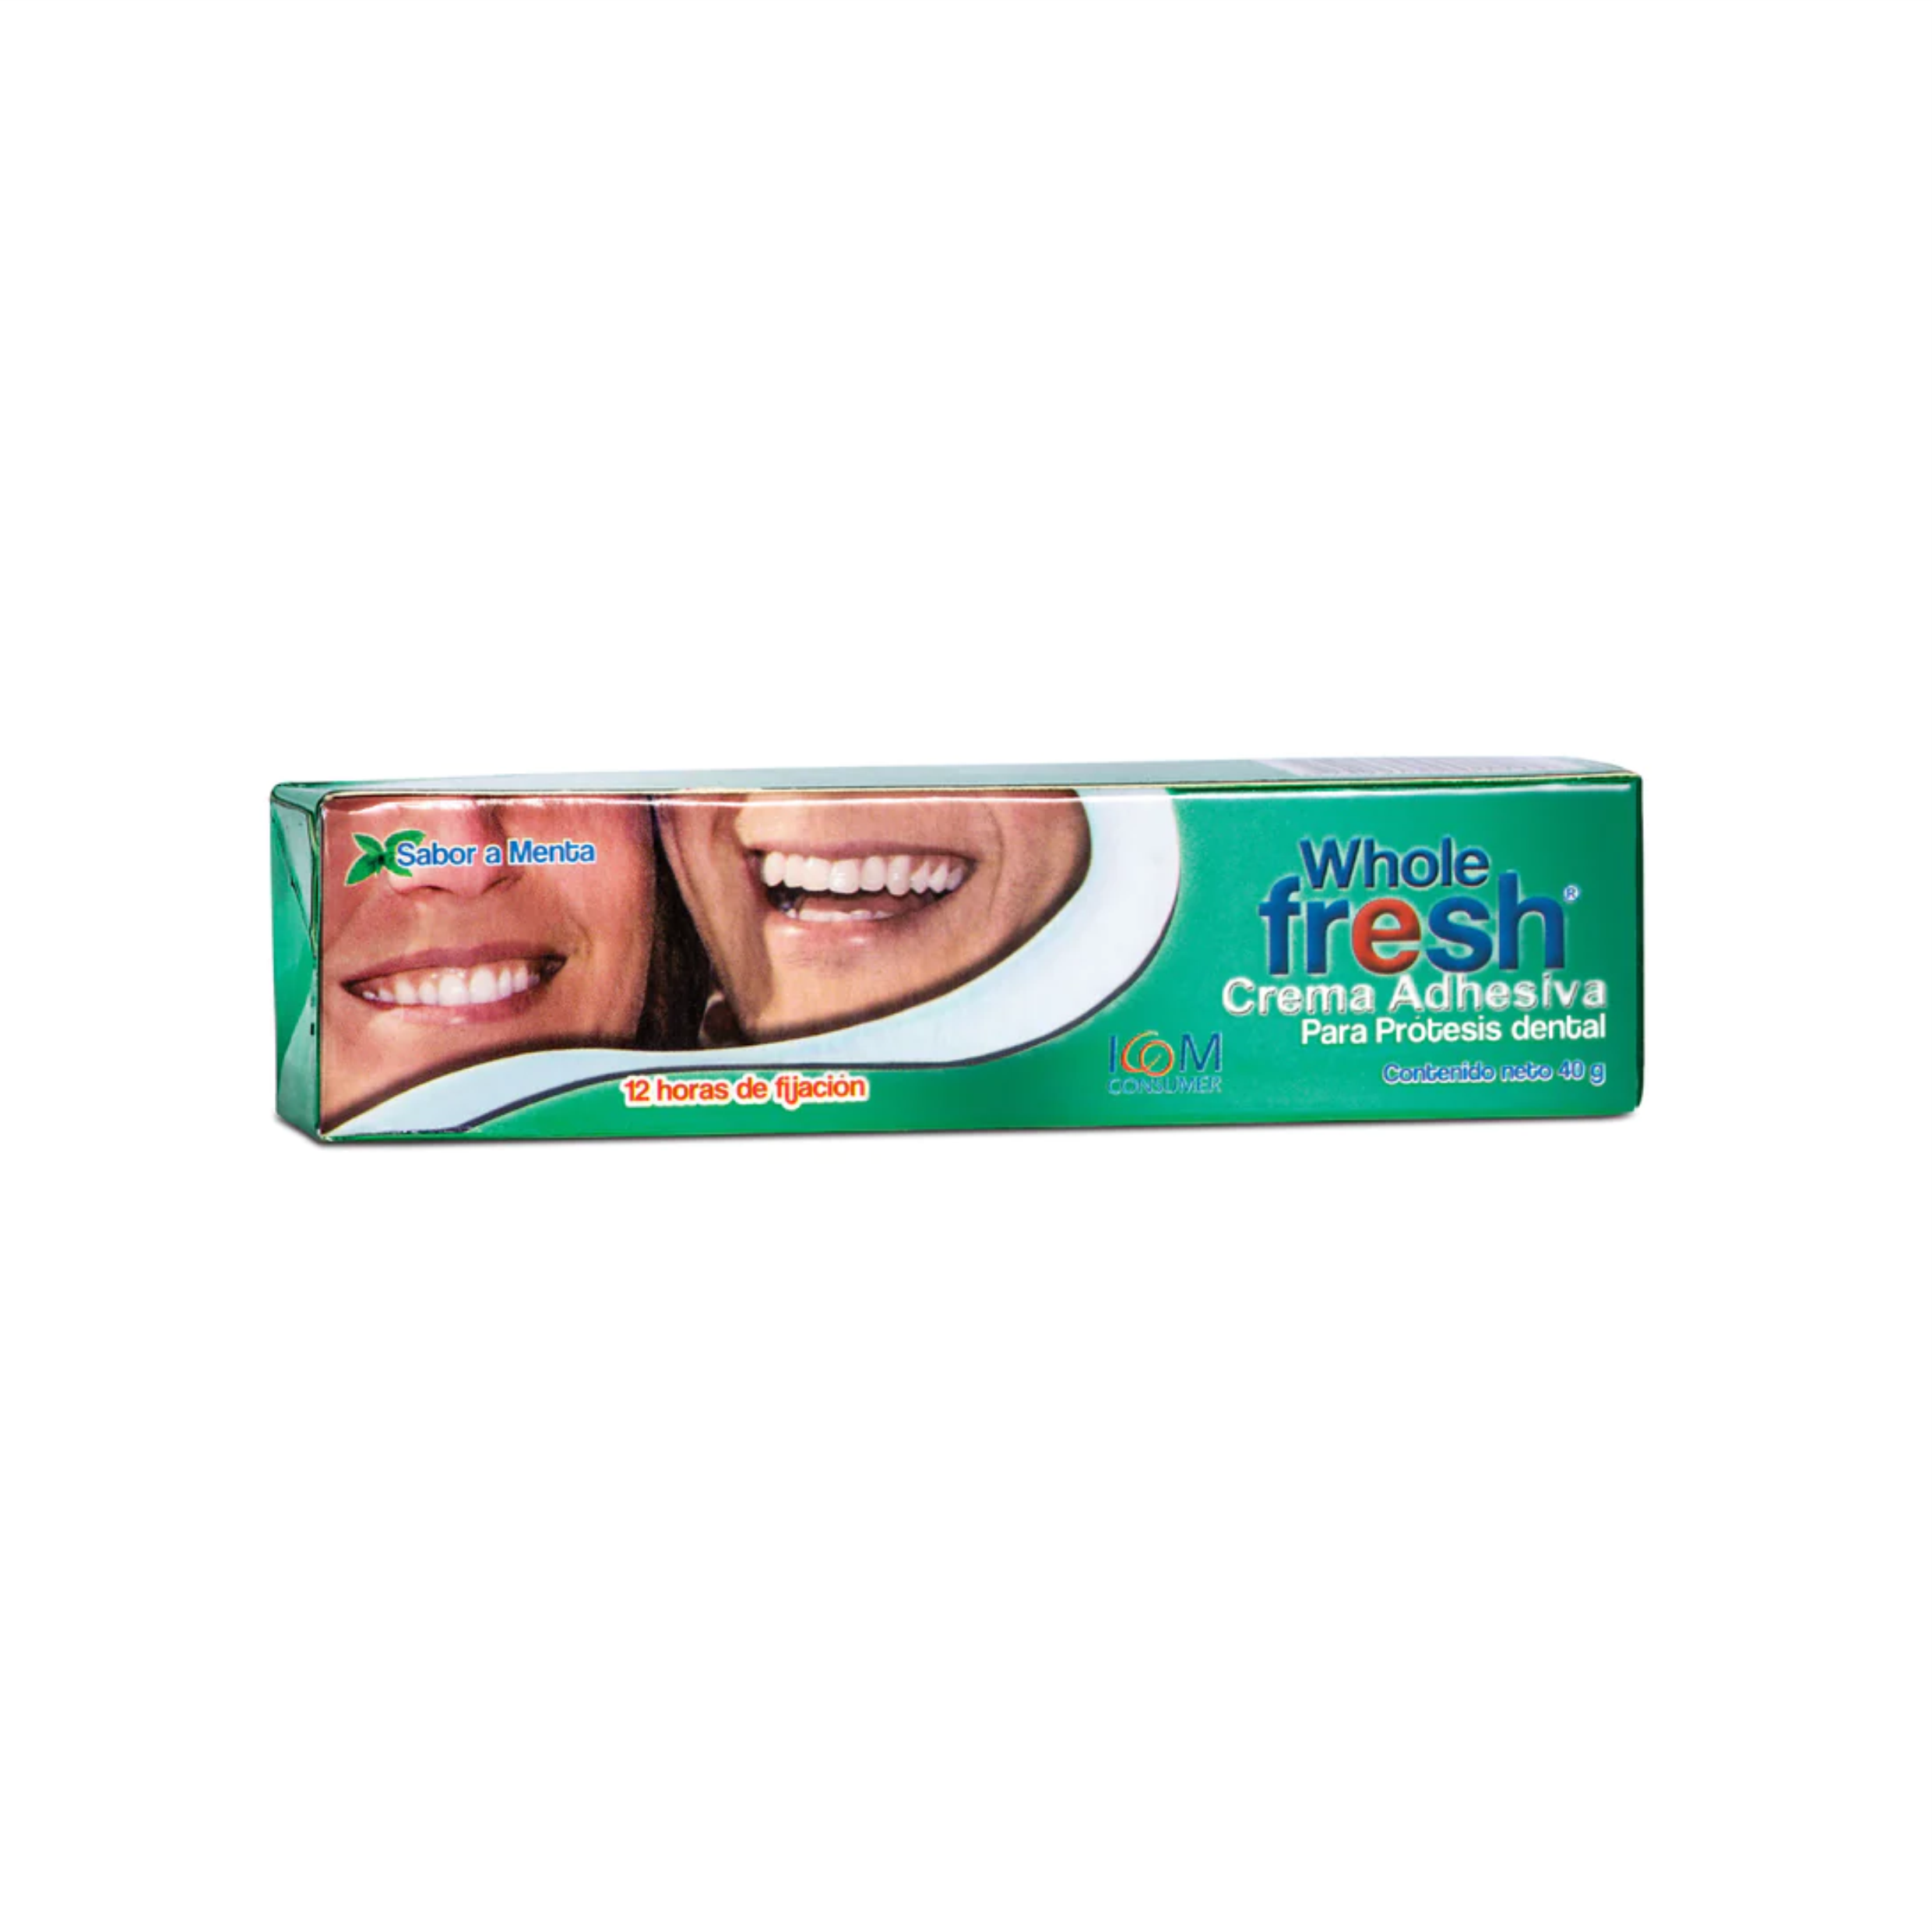 Crema Adhesiva de Prótesis Dental Whole Fresh Sabor Menta 40G